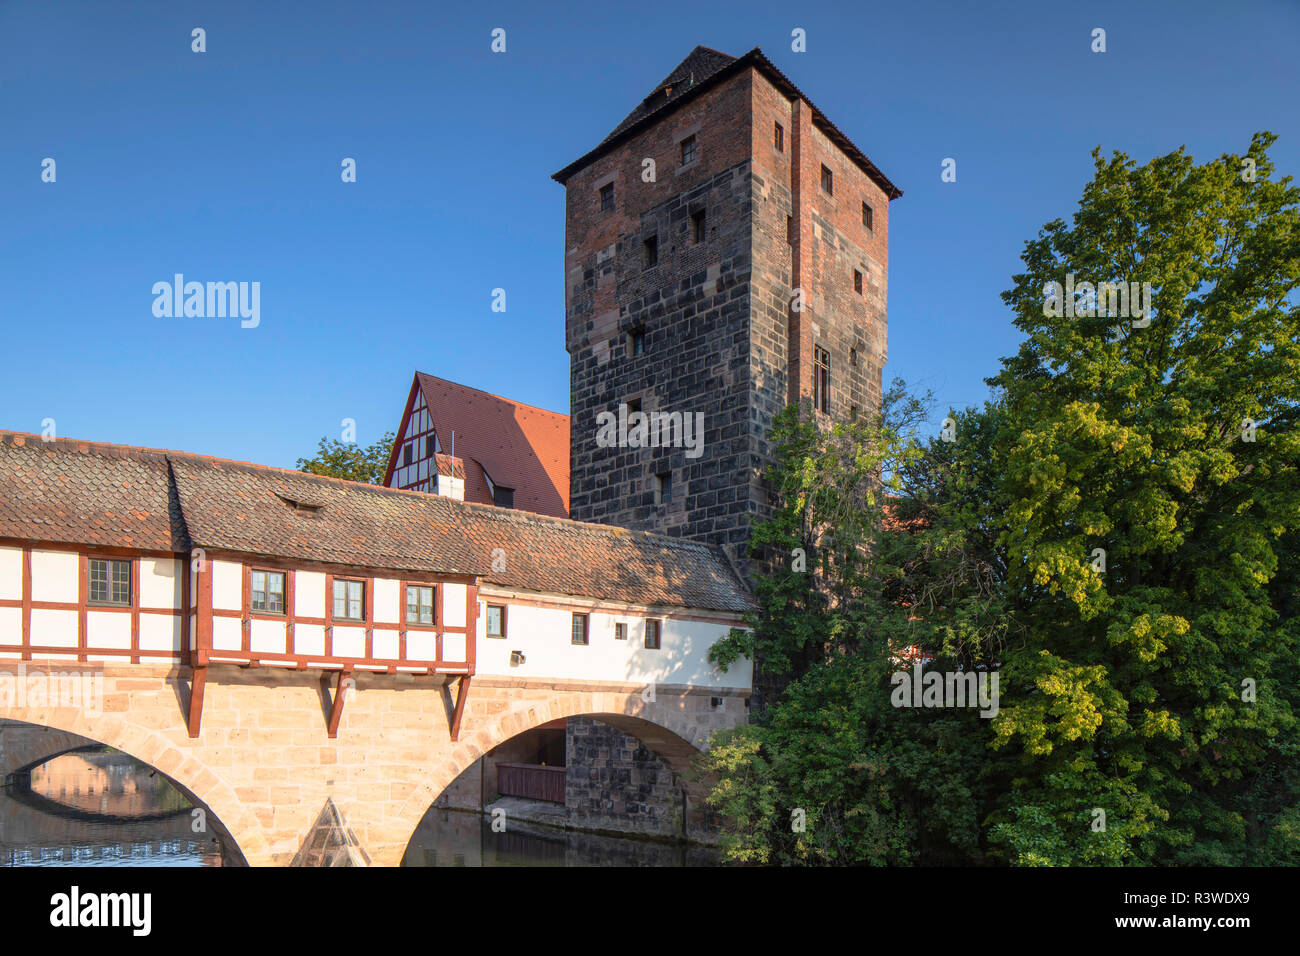 Weinstadel and River Pegnitz, Nuremberg, Bavaria, Germany Stock Photo